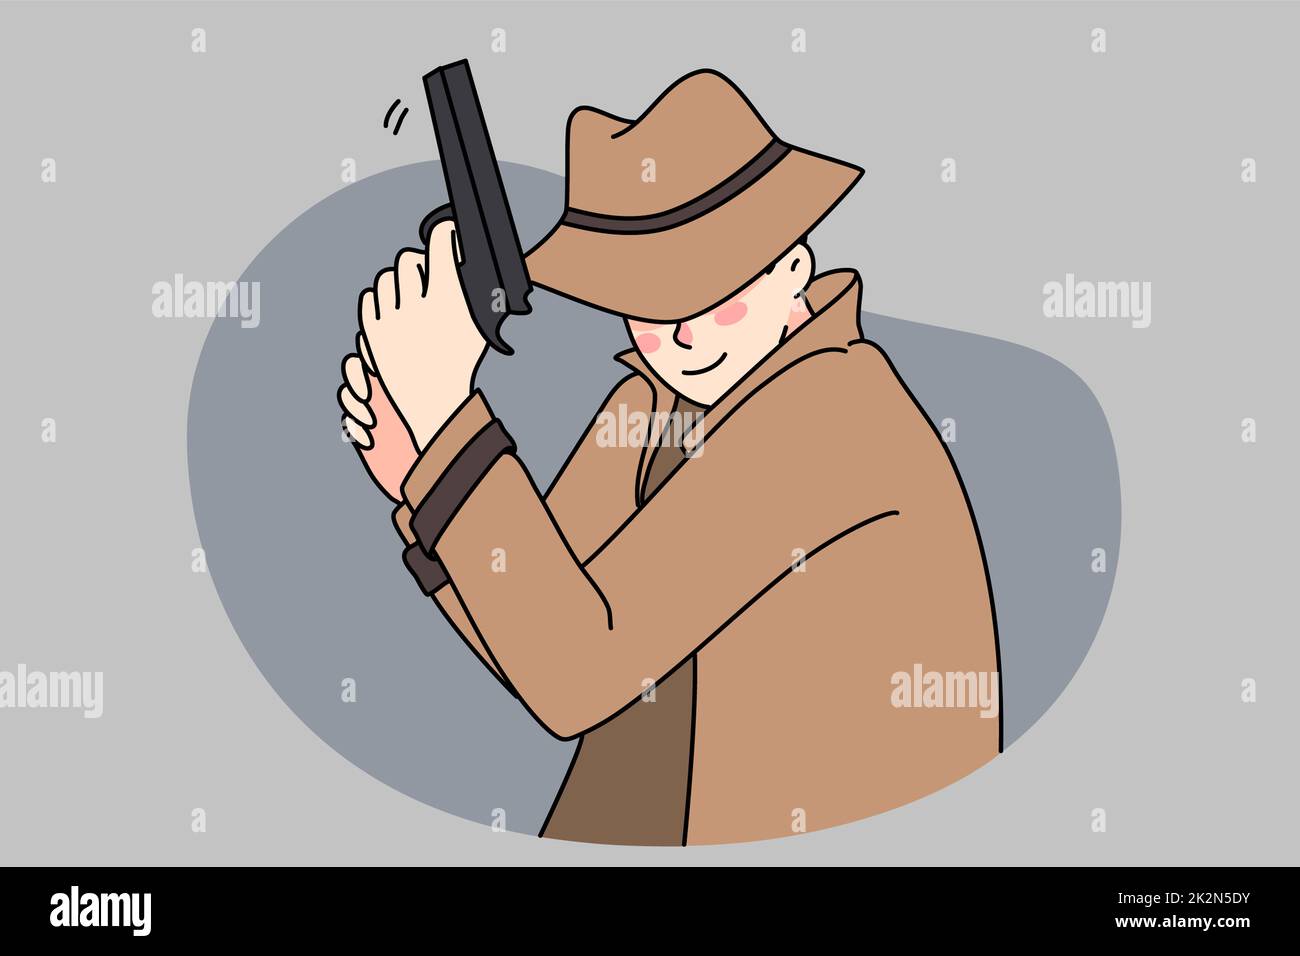 Male detective with gun pursue criminal Stock Photo